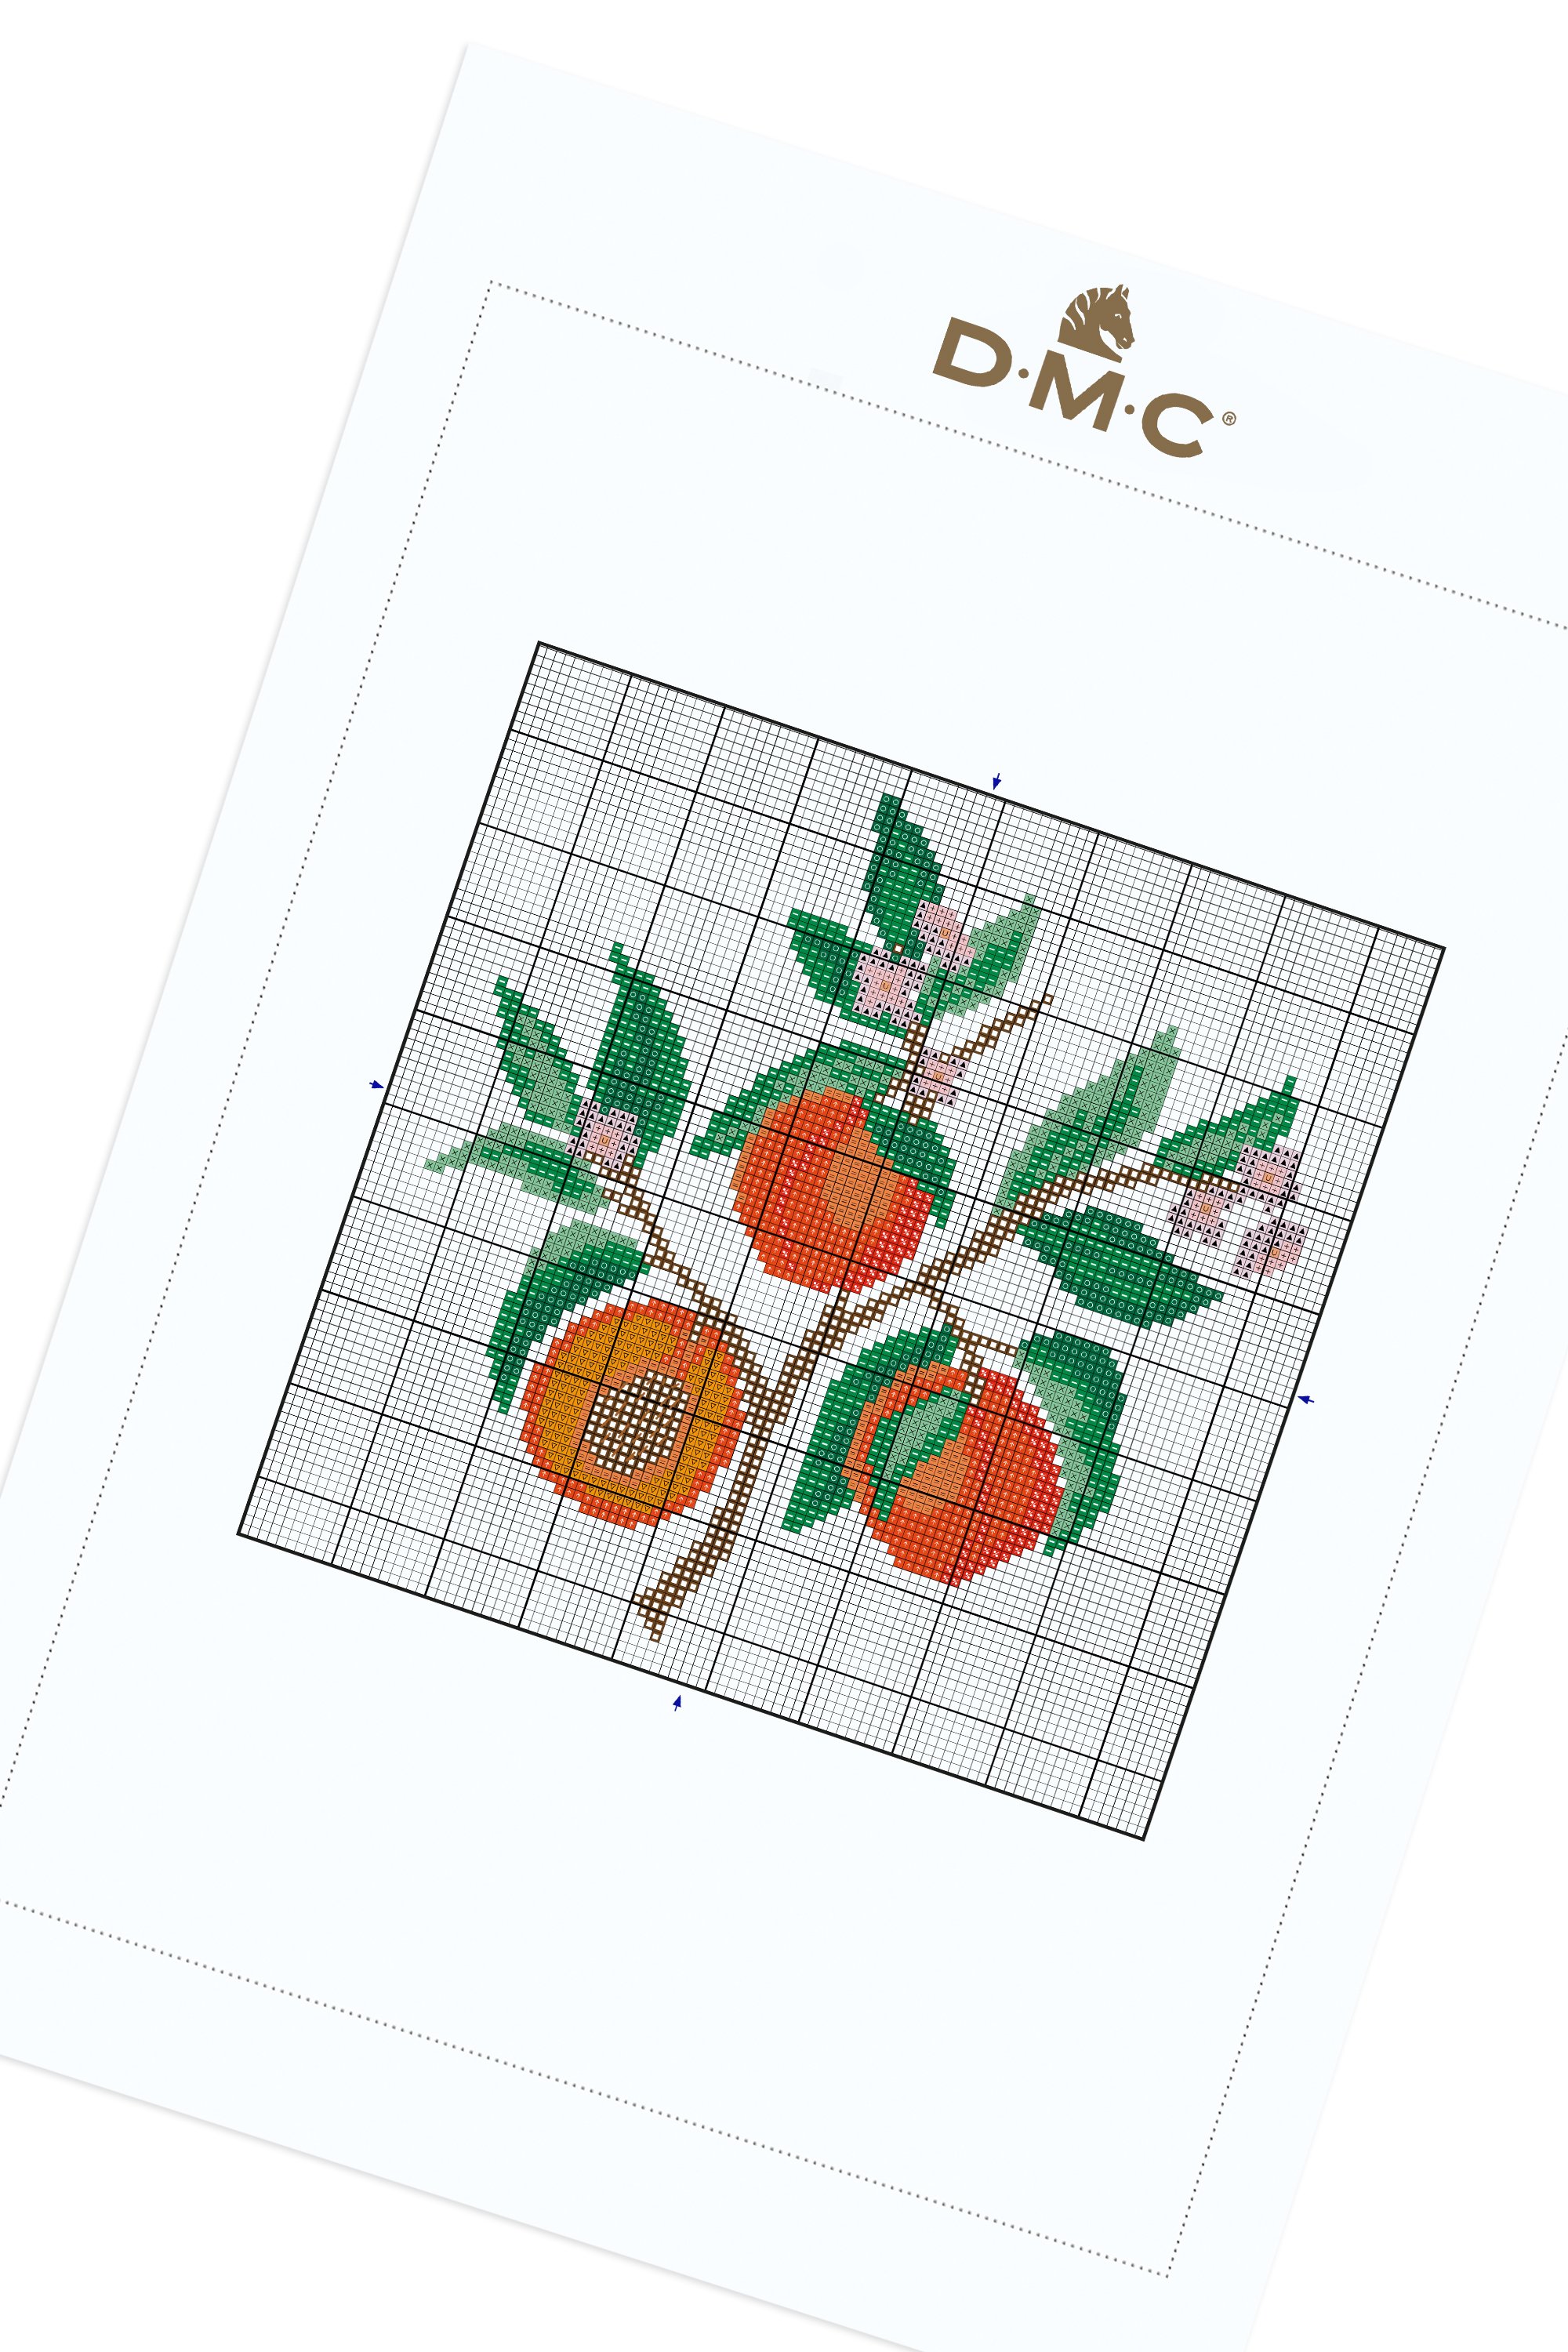 orange fruits peach cross stitch pattern fruits cross stitch pattern instant download ripe peaches Peaches Cross Stitch Pattern